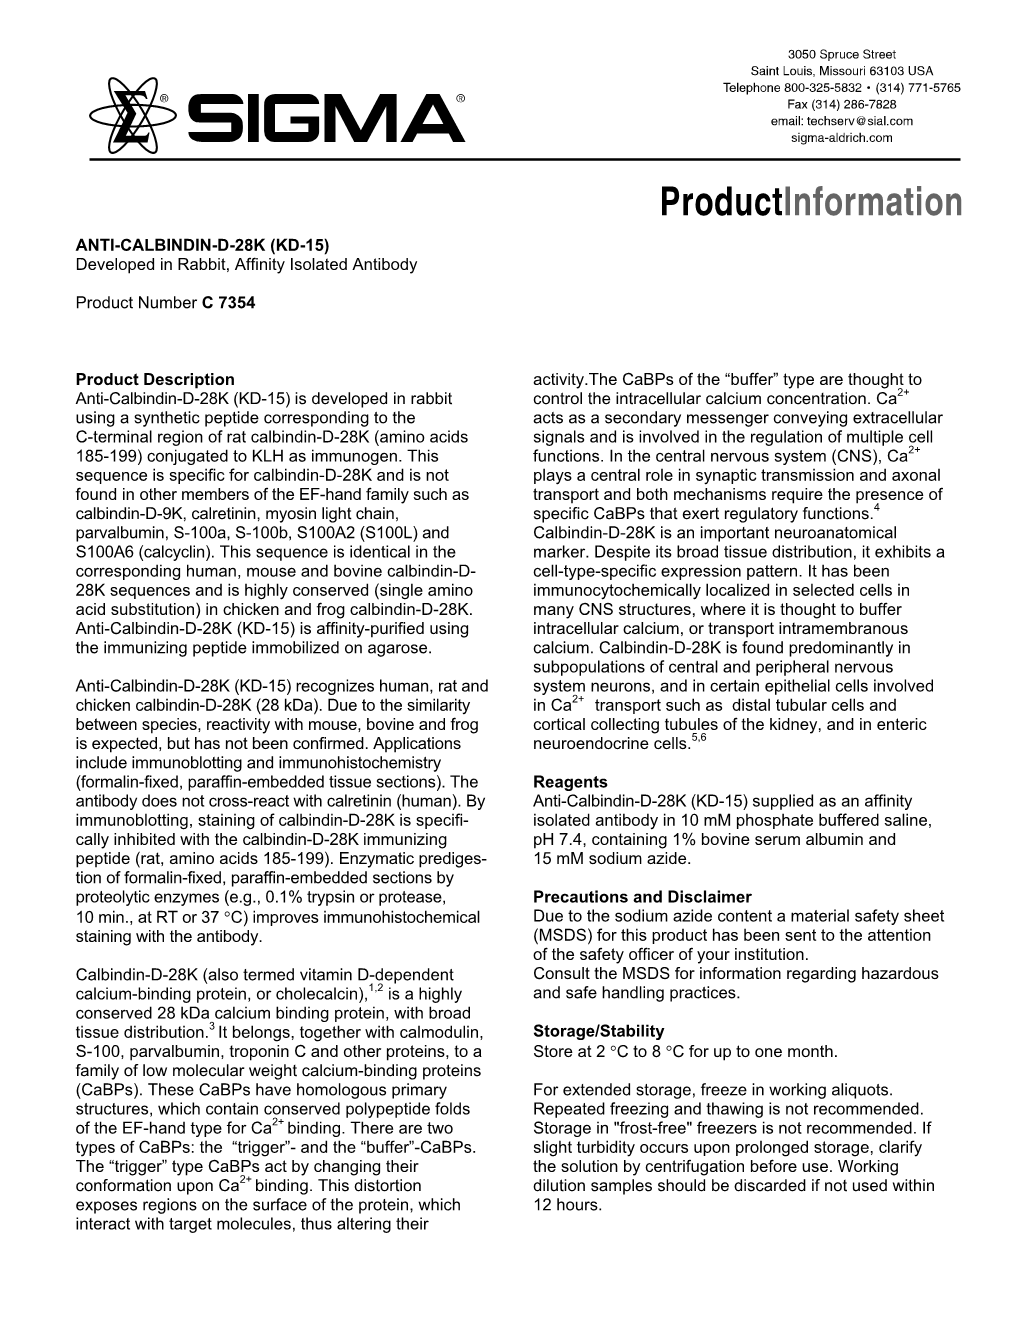 Anti-Calbindin-D -28K (KD-15) Antibody Produced in Rabbit (C7354)